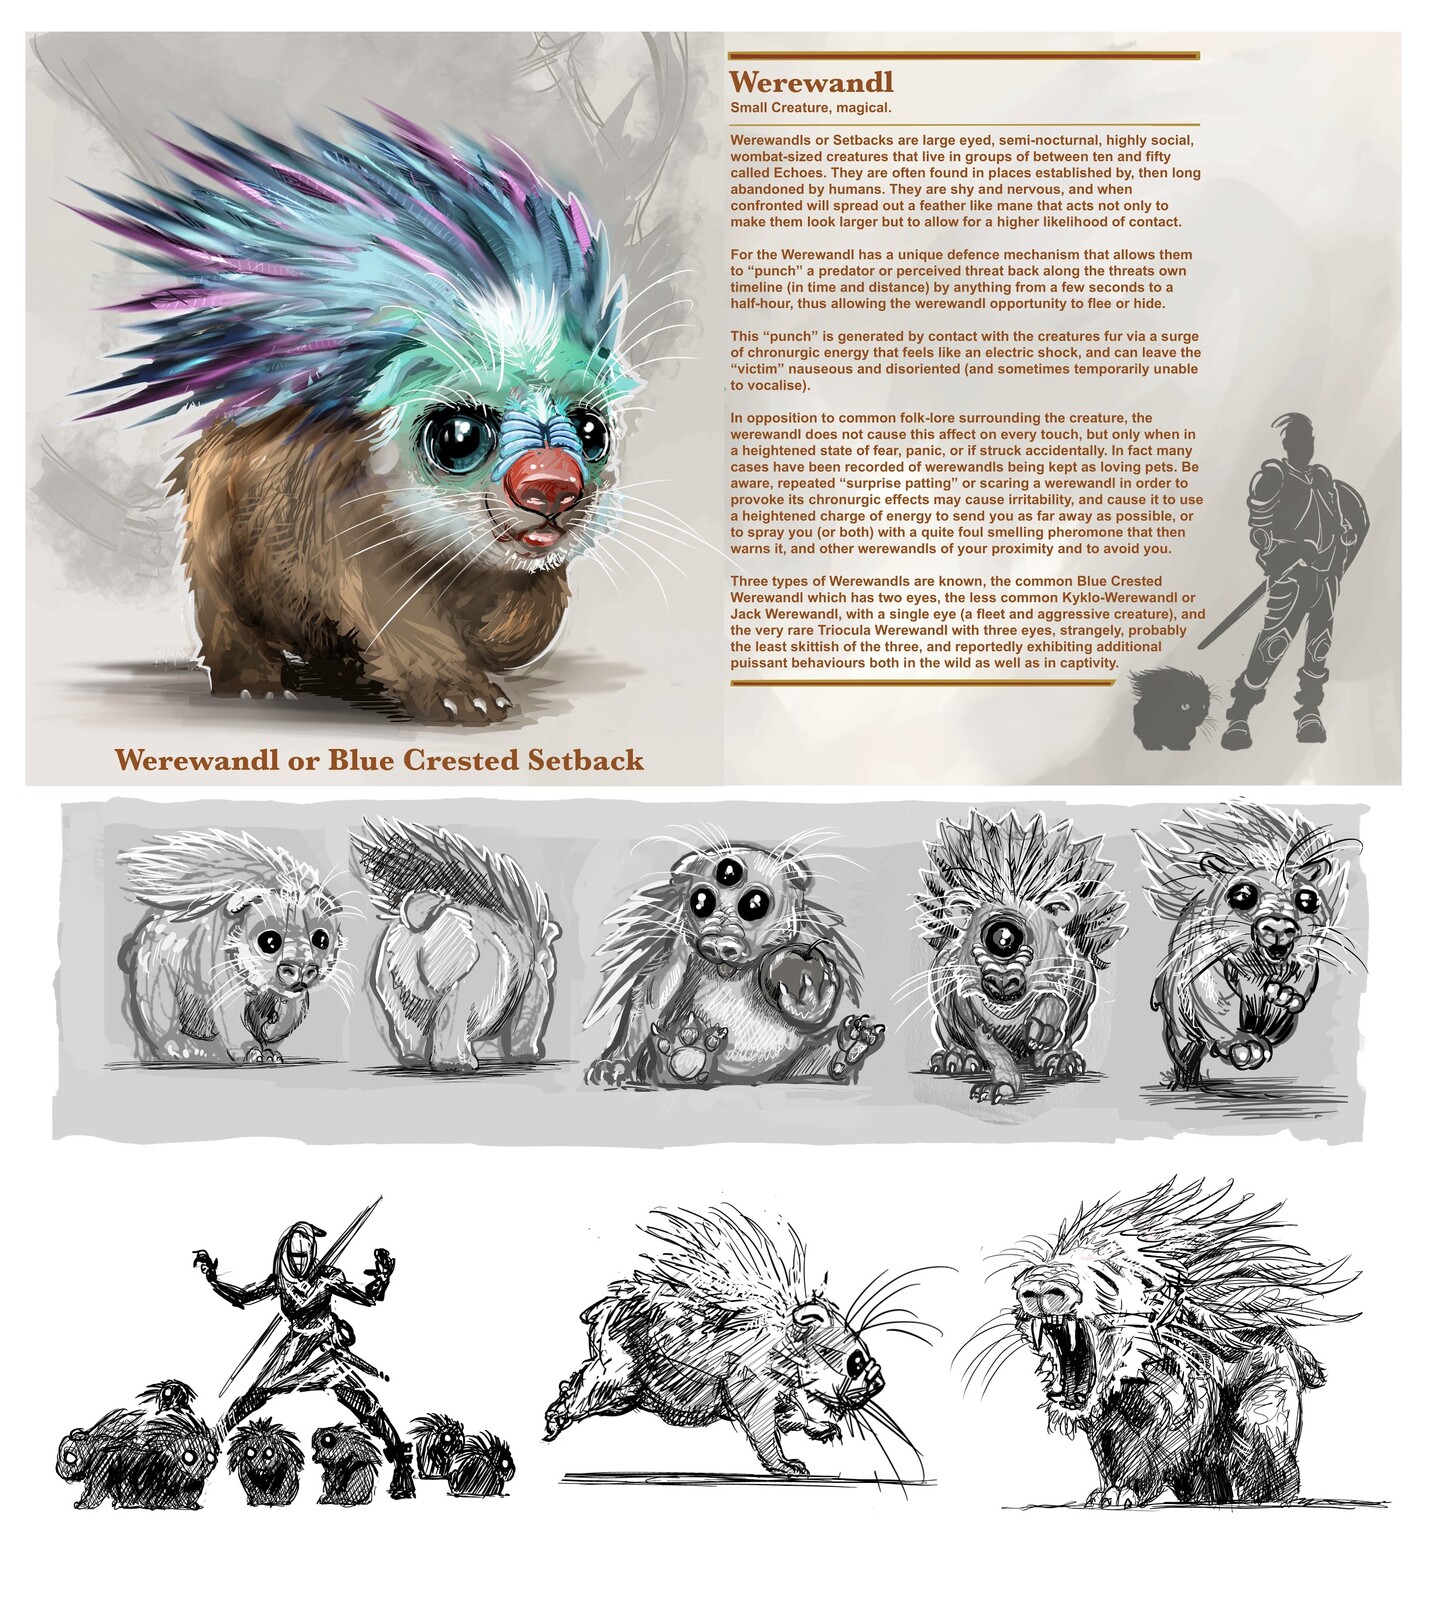 A presentation sheet for the creature design